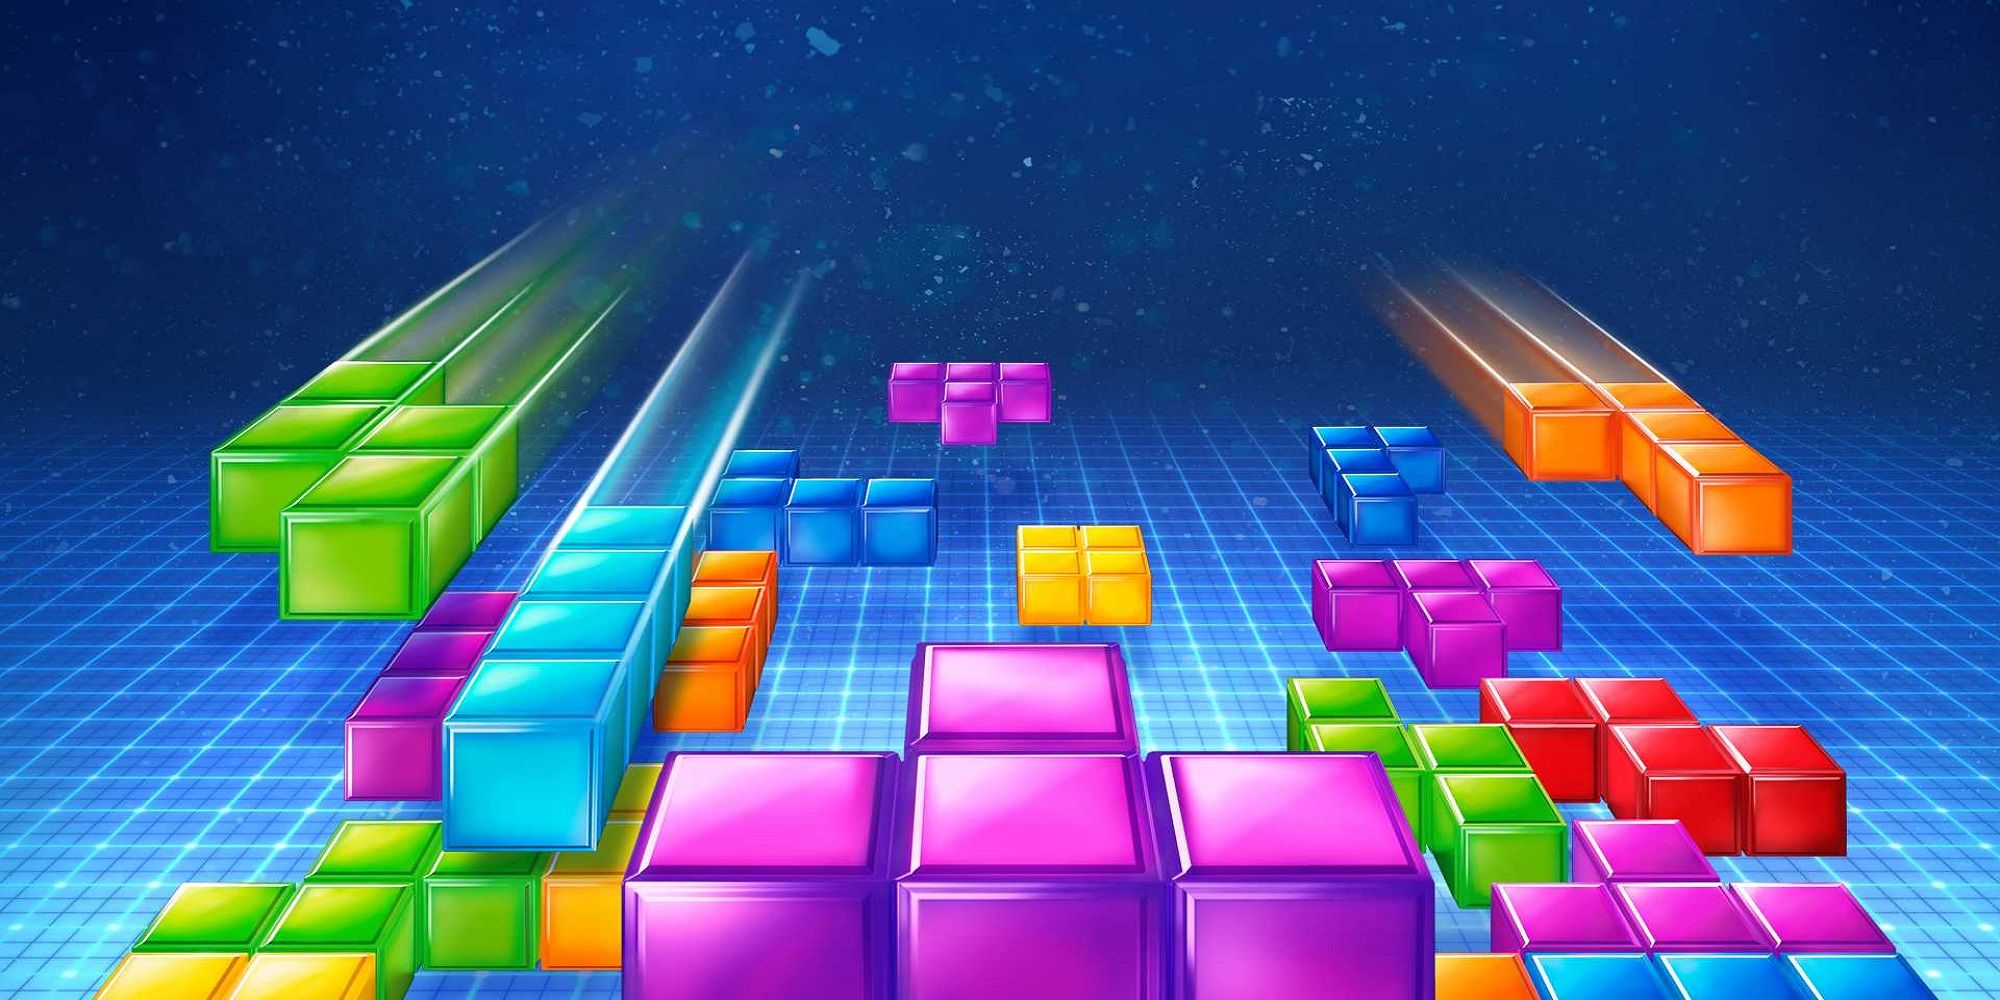 Tetrominoes falling from the sky in Tetris